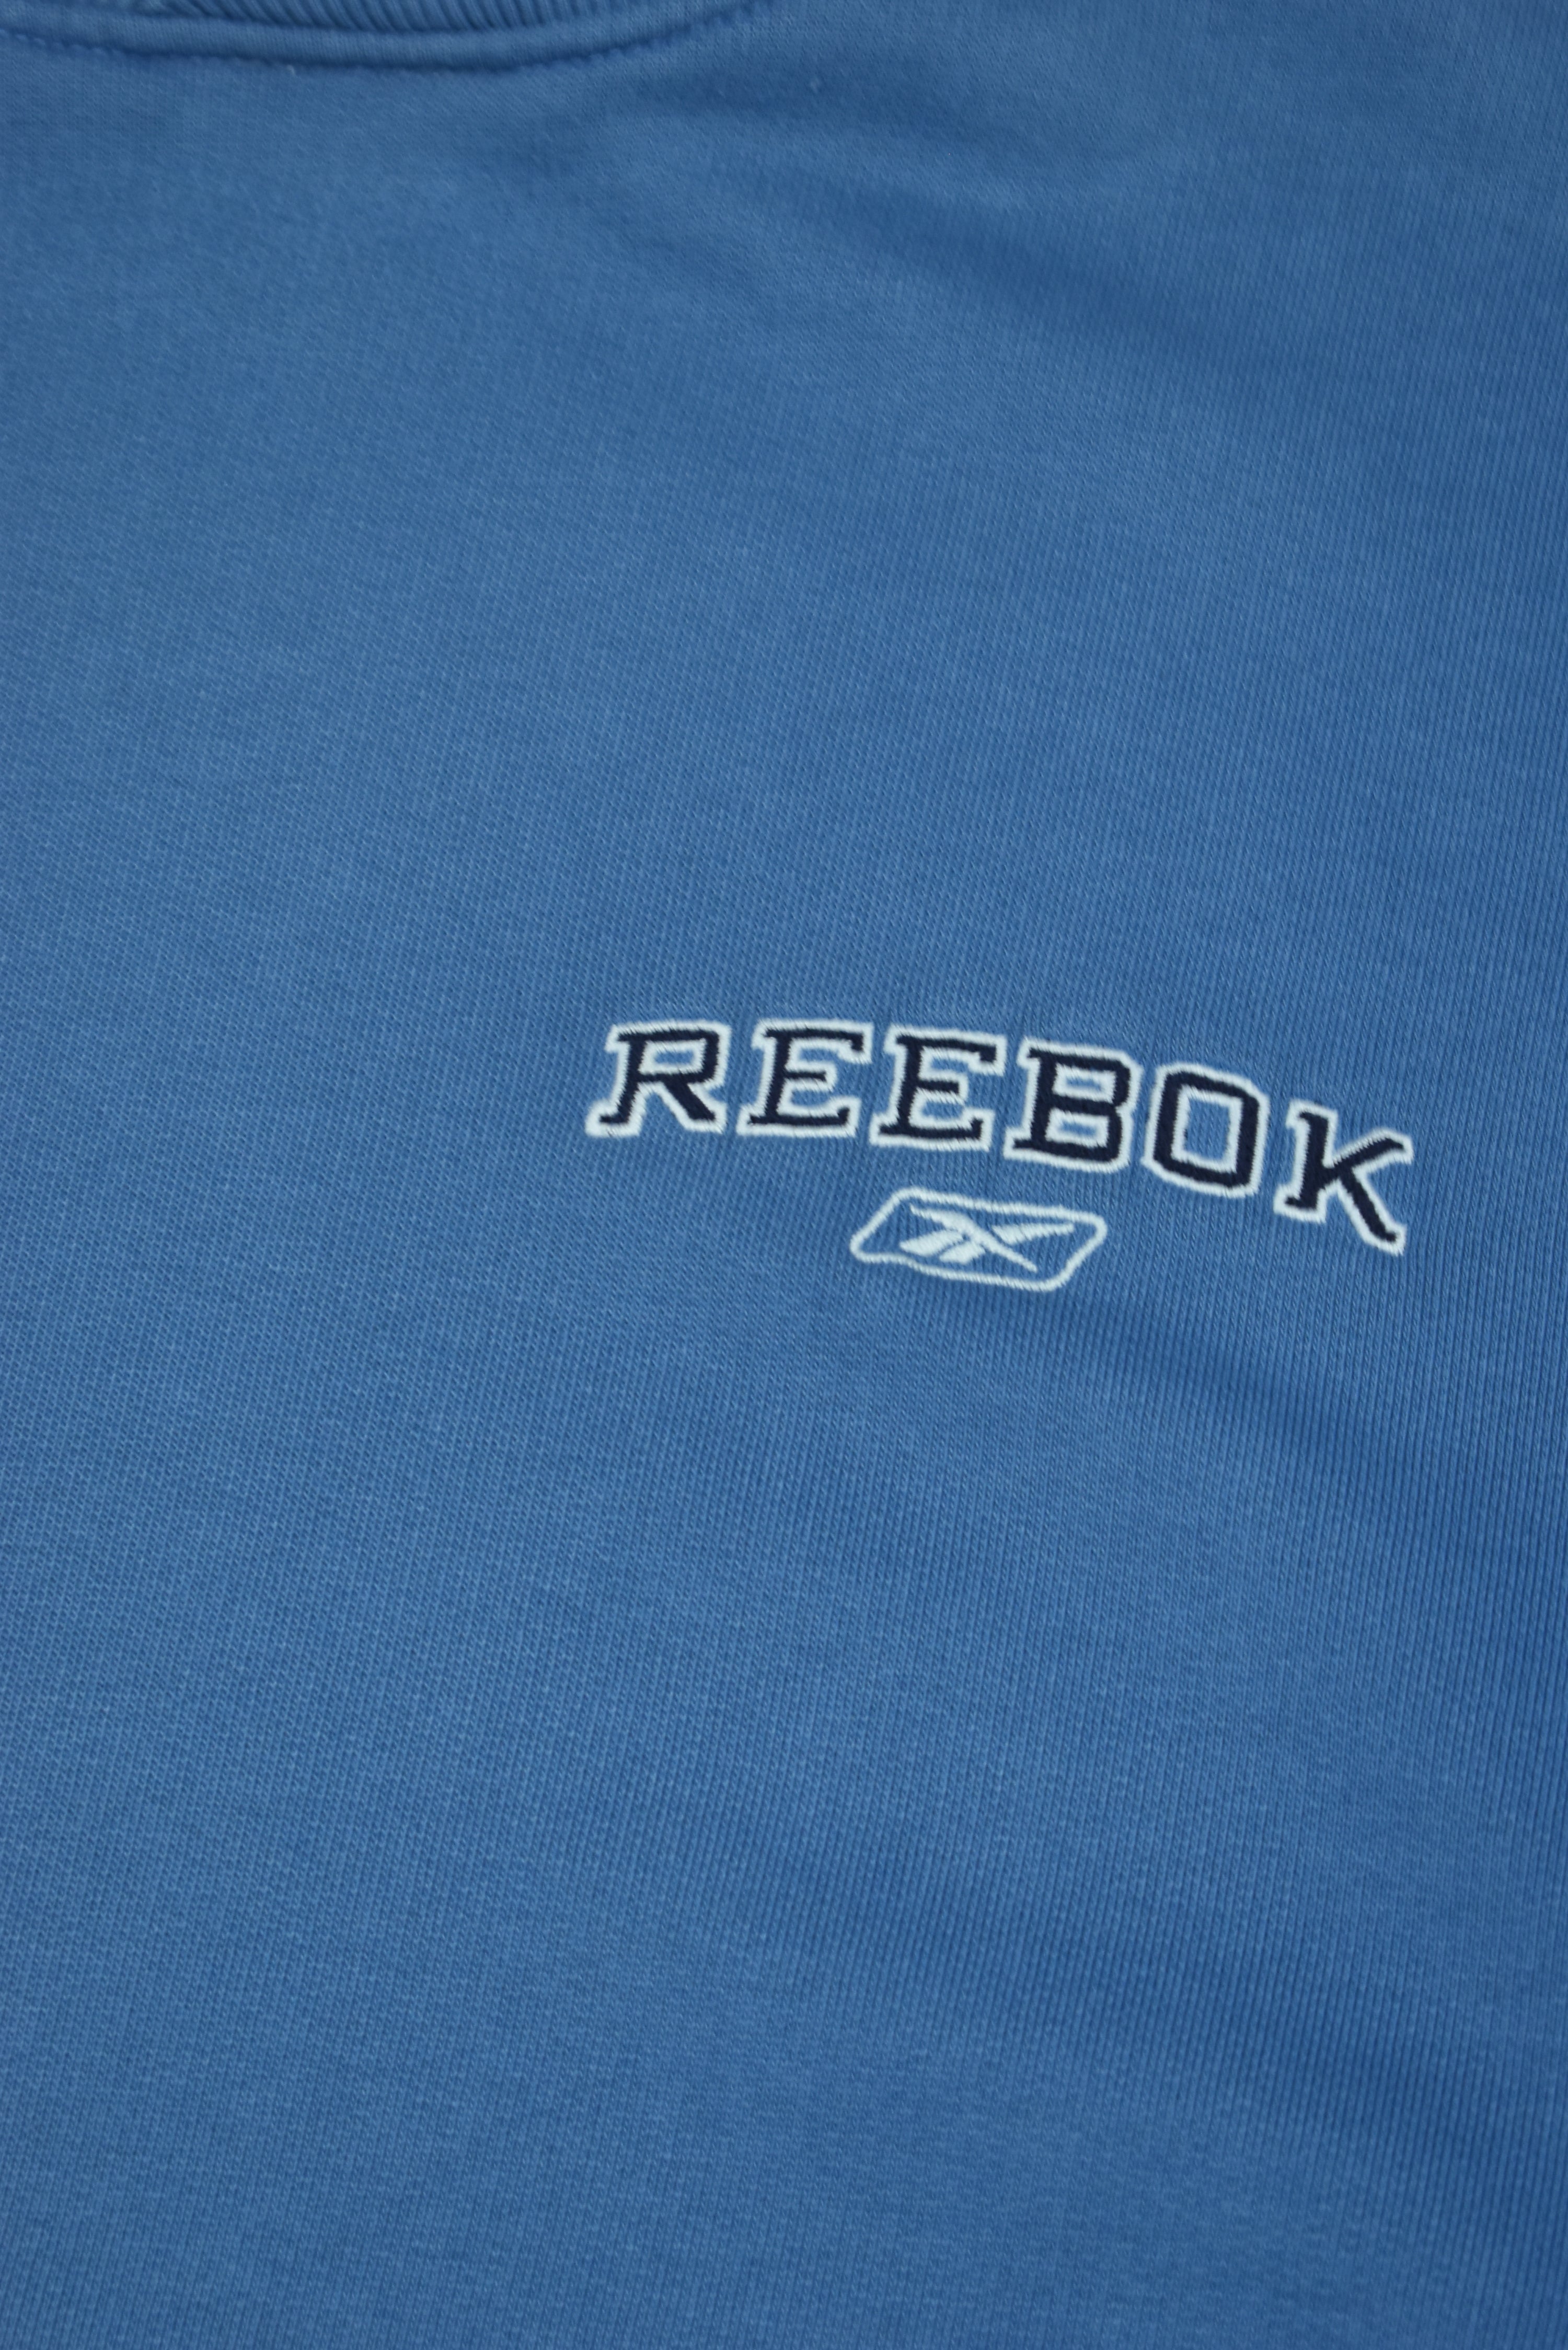 Vintage Reebok Embridery Logo Sweatshirt Large